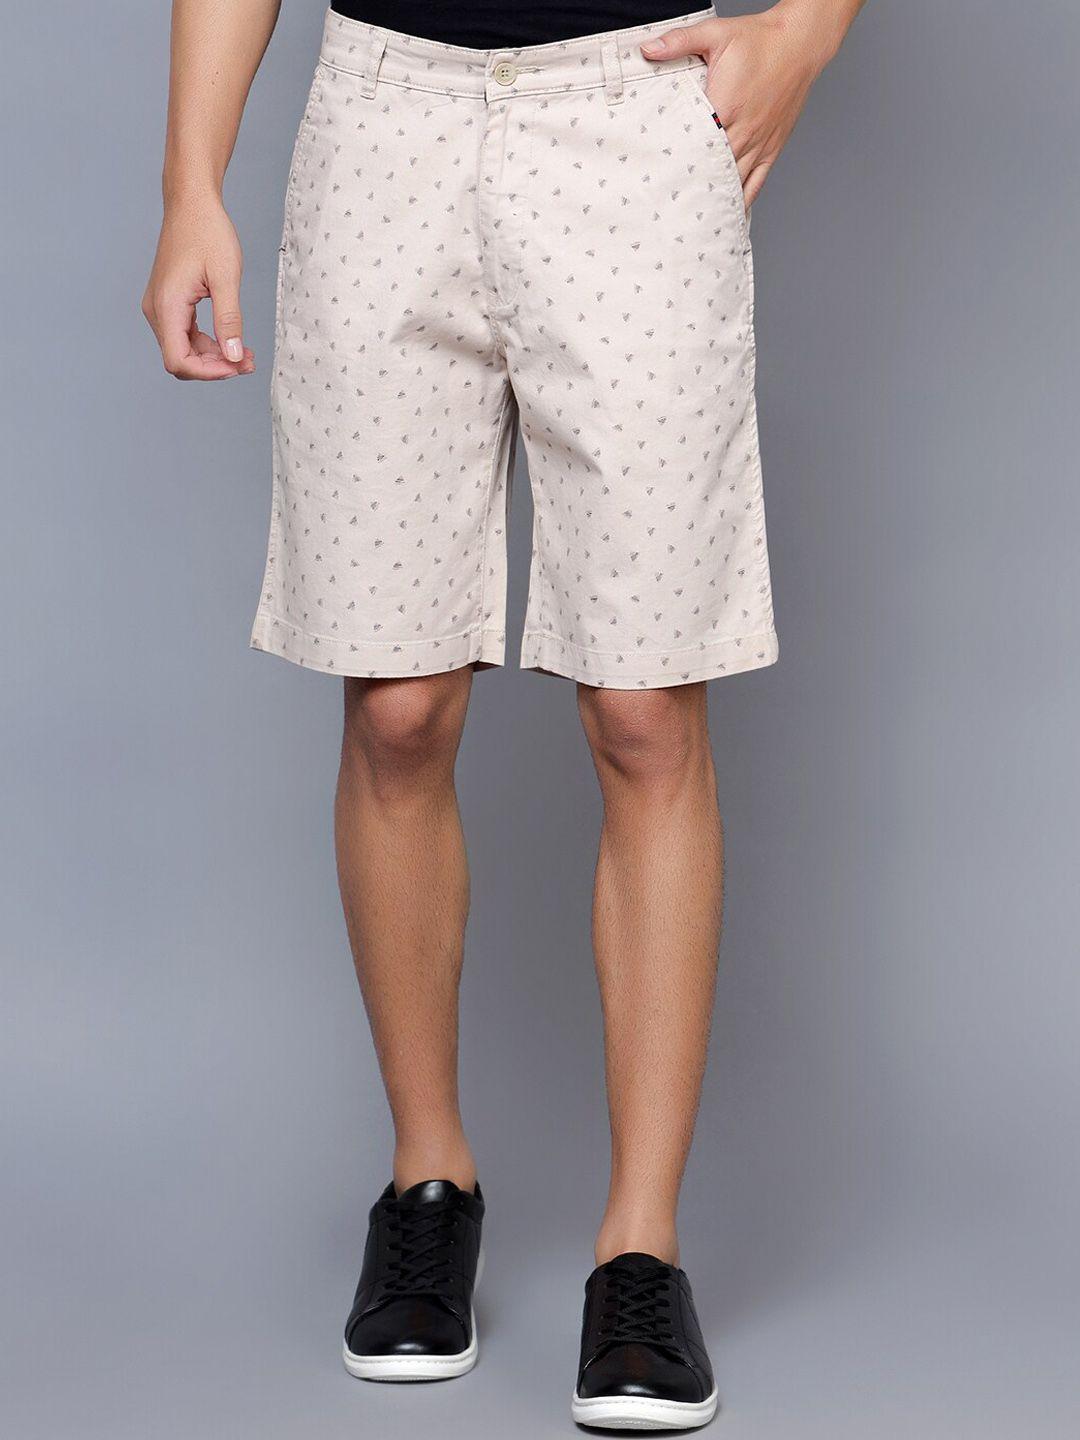 cantabil men micro ditsy printed mid-rise knee length cotton chino shorts